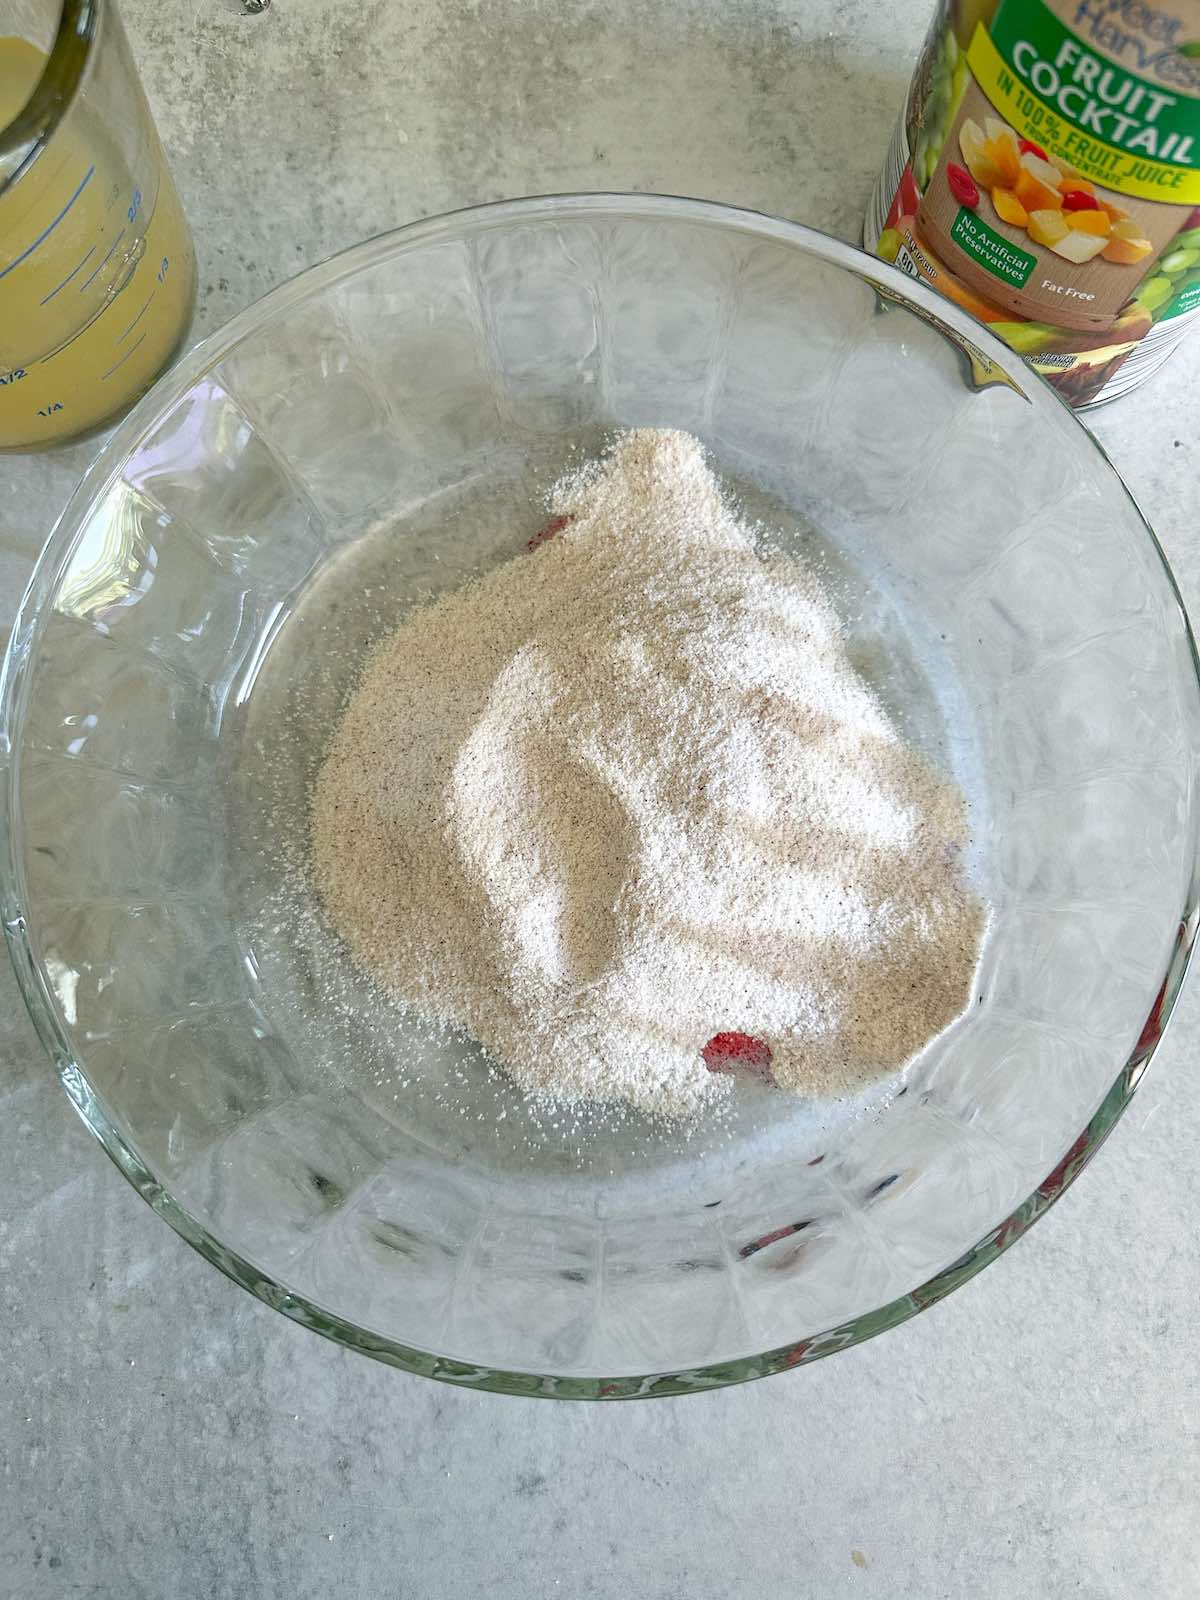 Powdered gelatin in a glass bowl.